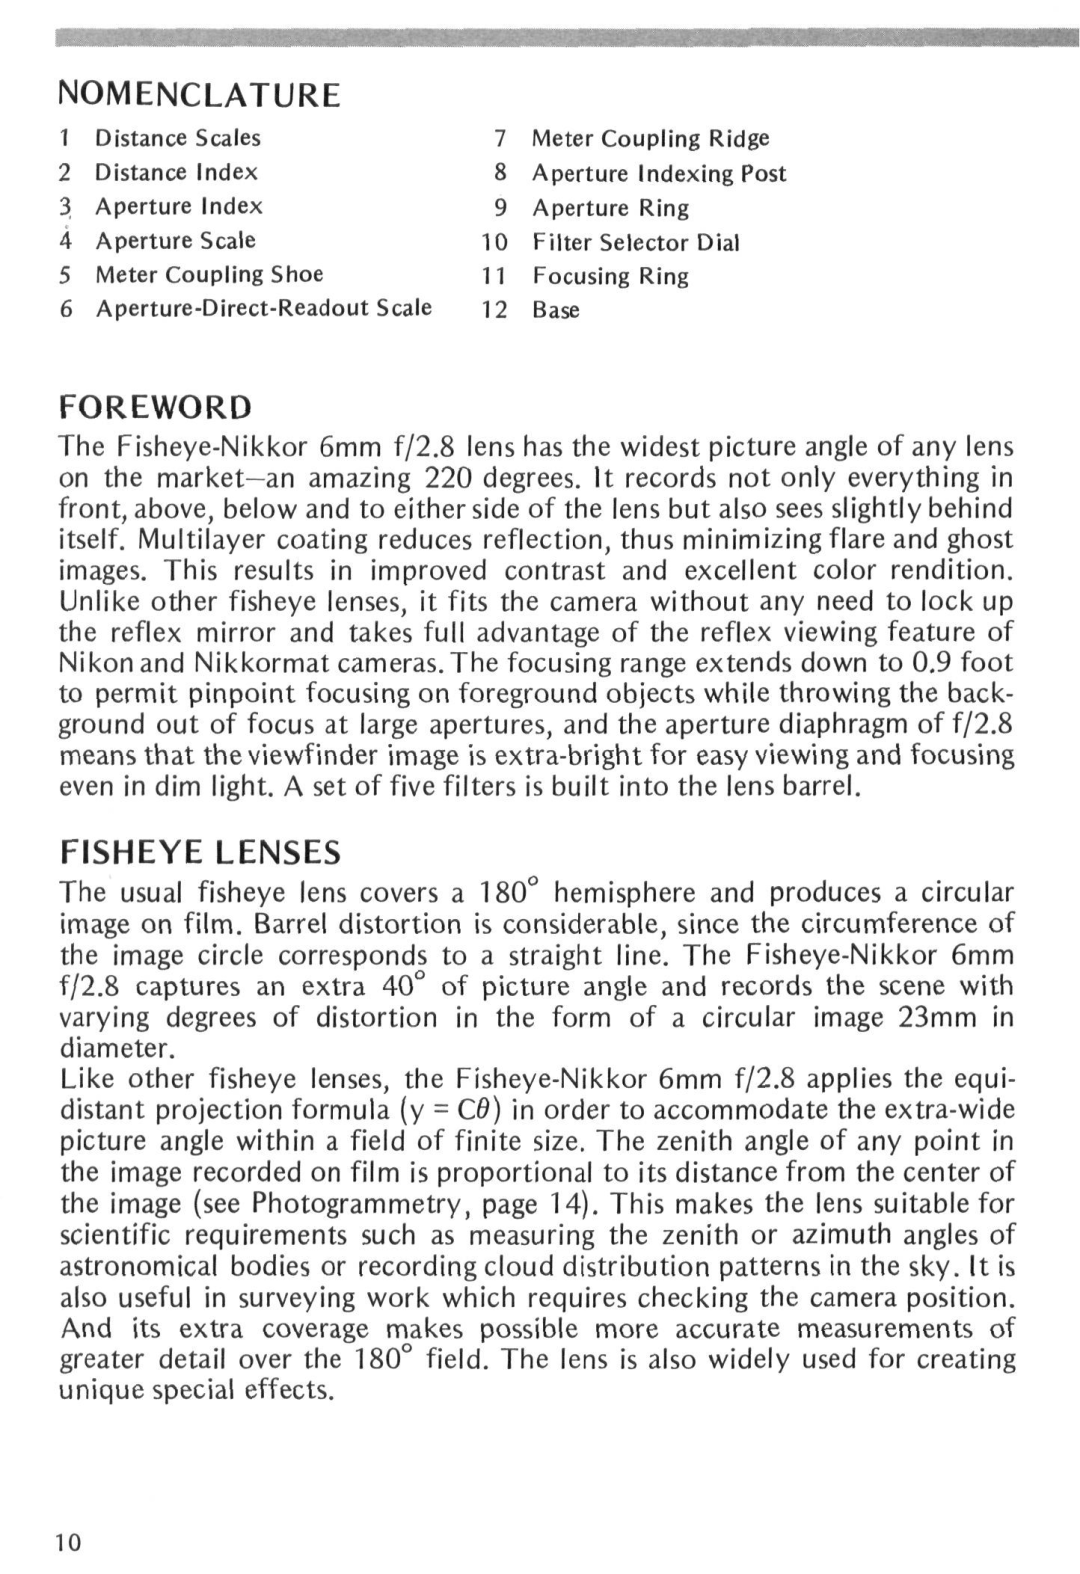 Nikon Fisheye-Nikkor 6mm f/2.8 instruction manual Nomenclature, Foreword, Fisheye Lenses 